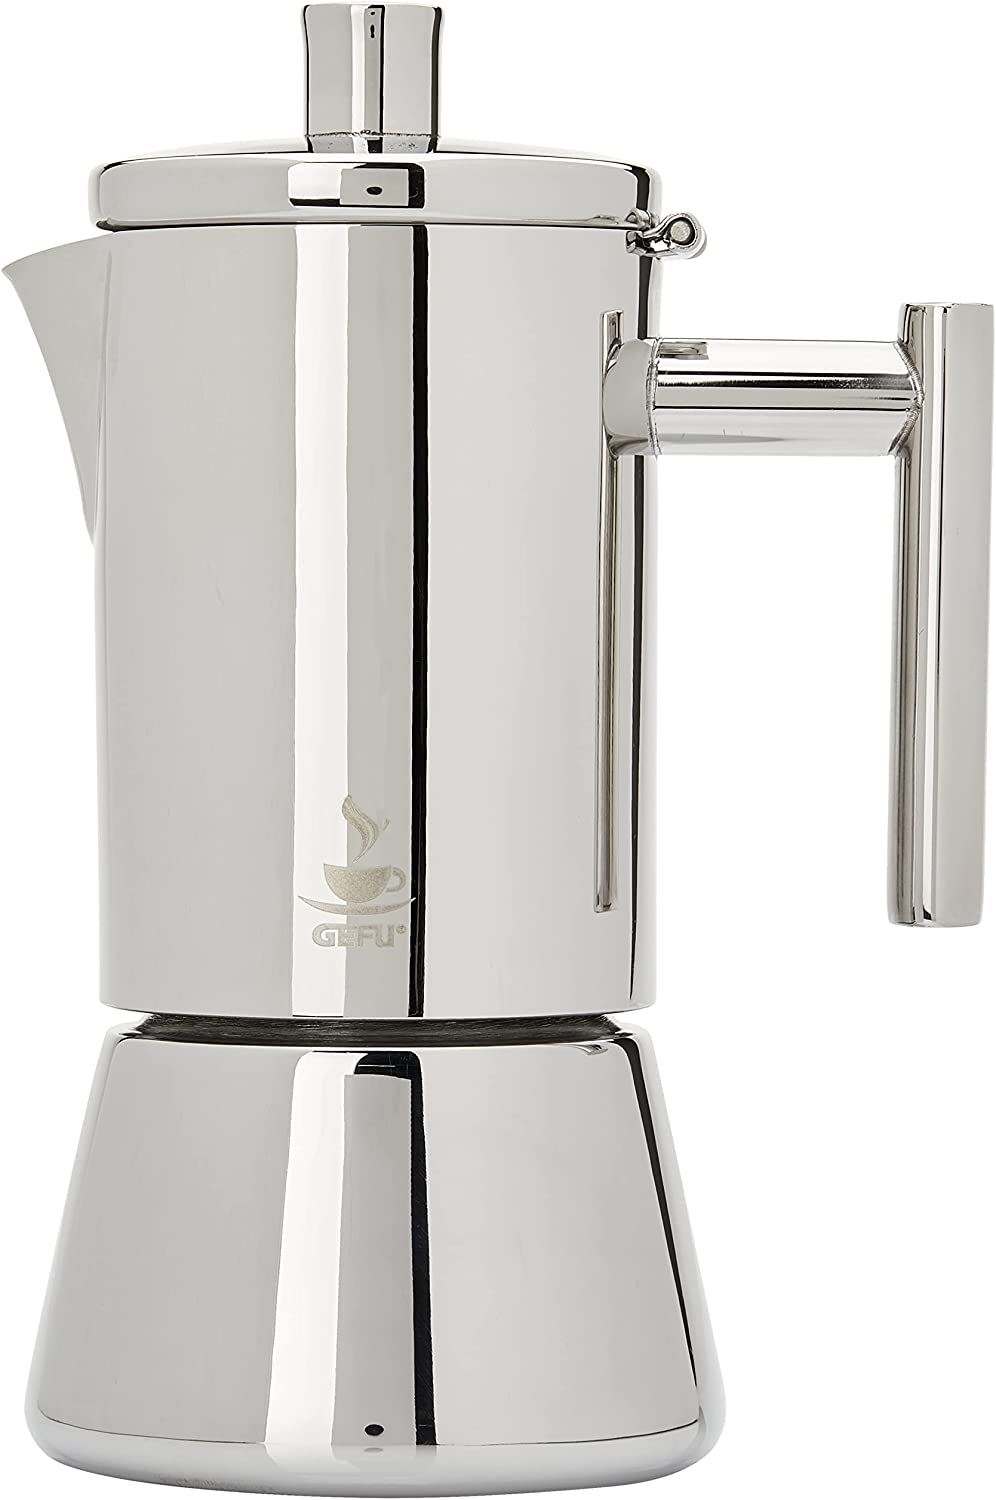 The Original GEFU Espresso Maker Nando 16380 - Premium Stainless Steel Coffee Machine for 4 Cups Highest Café Enjoyment